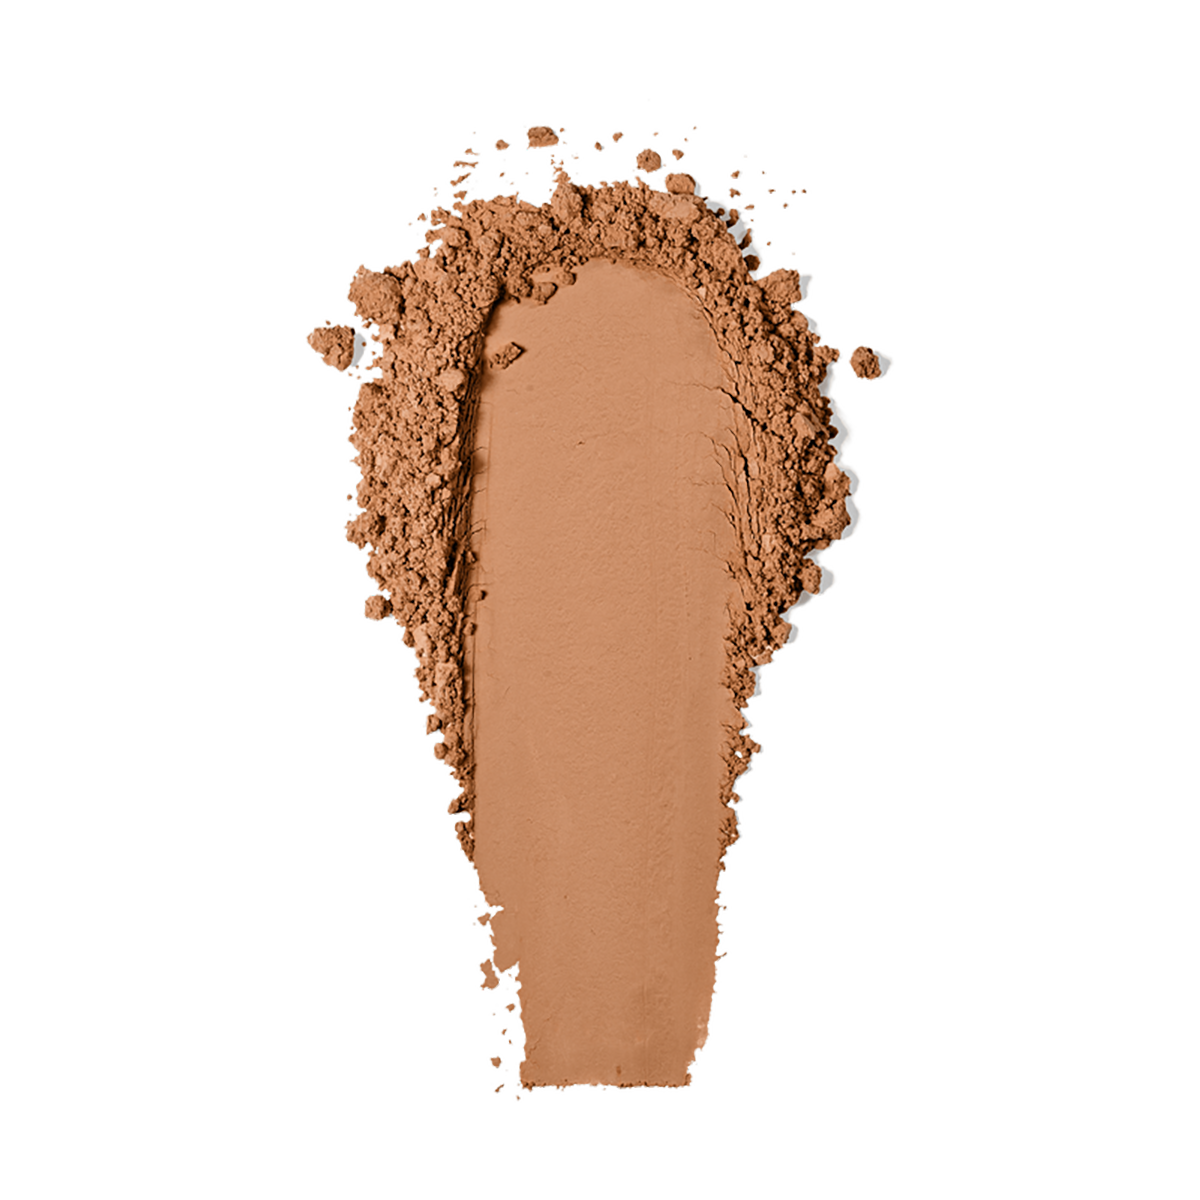 3.2 - Tan chestnut HD Skin Setting Powder